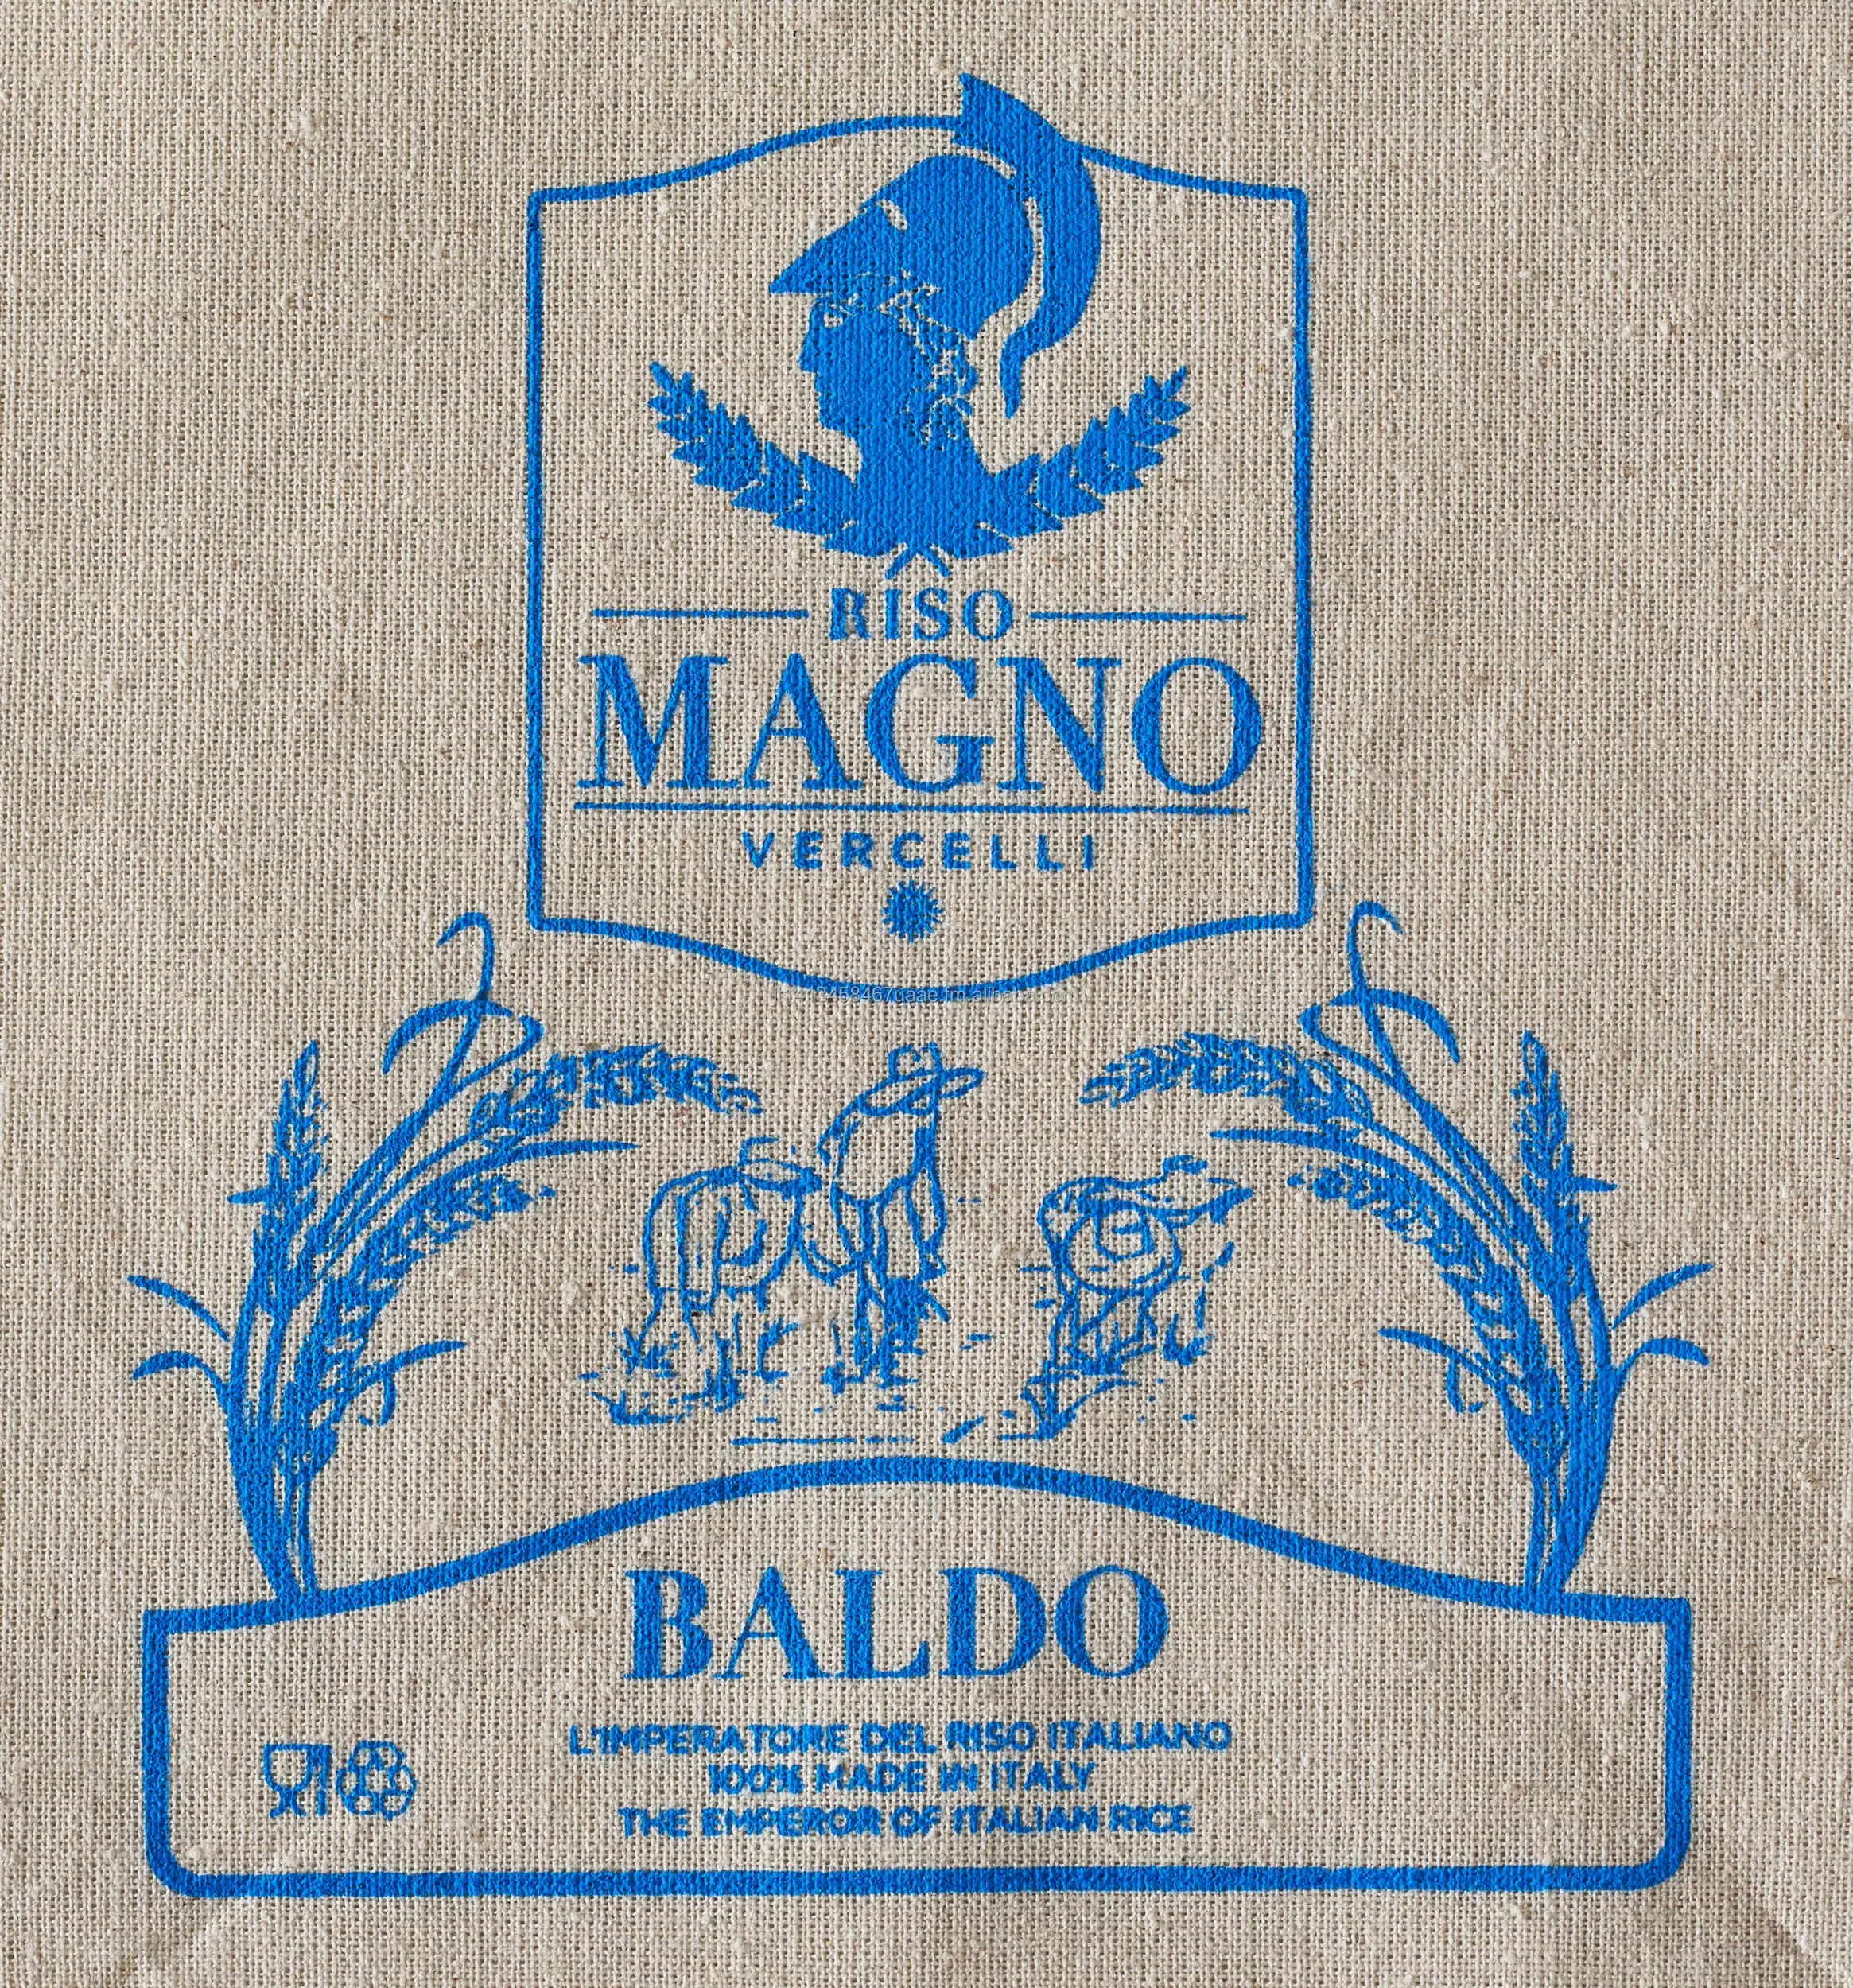 Premium Baldo White Rice 1kg Exclusive Package Long-grain Rice Riso Magno High Level 0 Admixture Gluten Free Gourmet No Ogm 2020